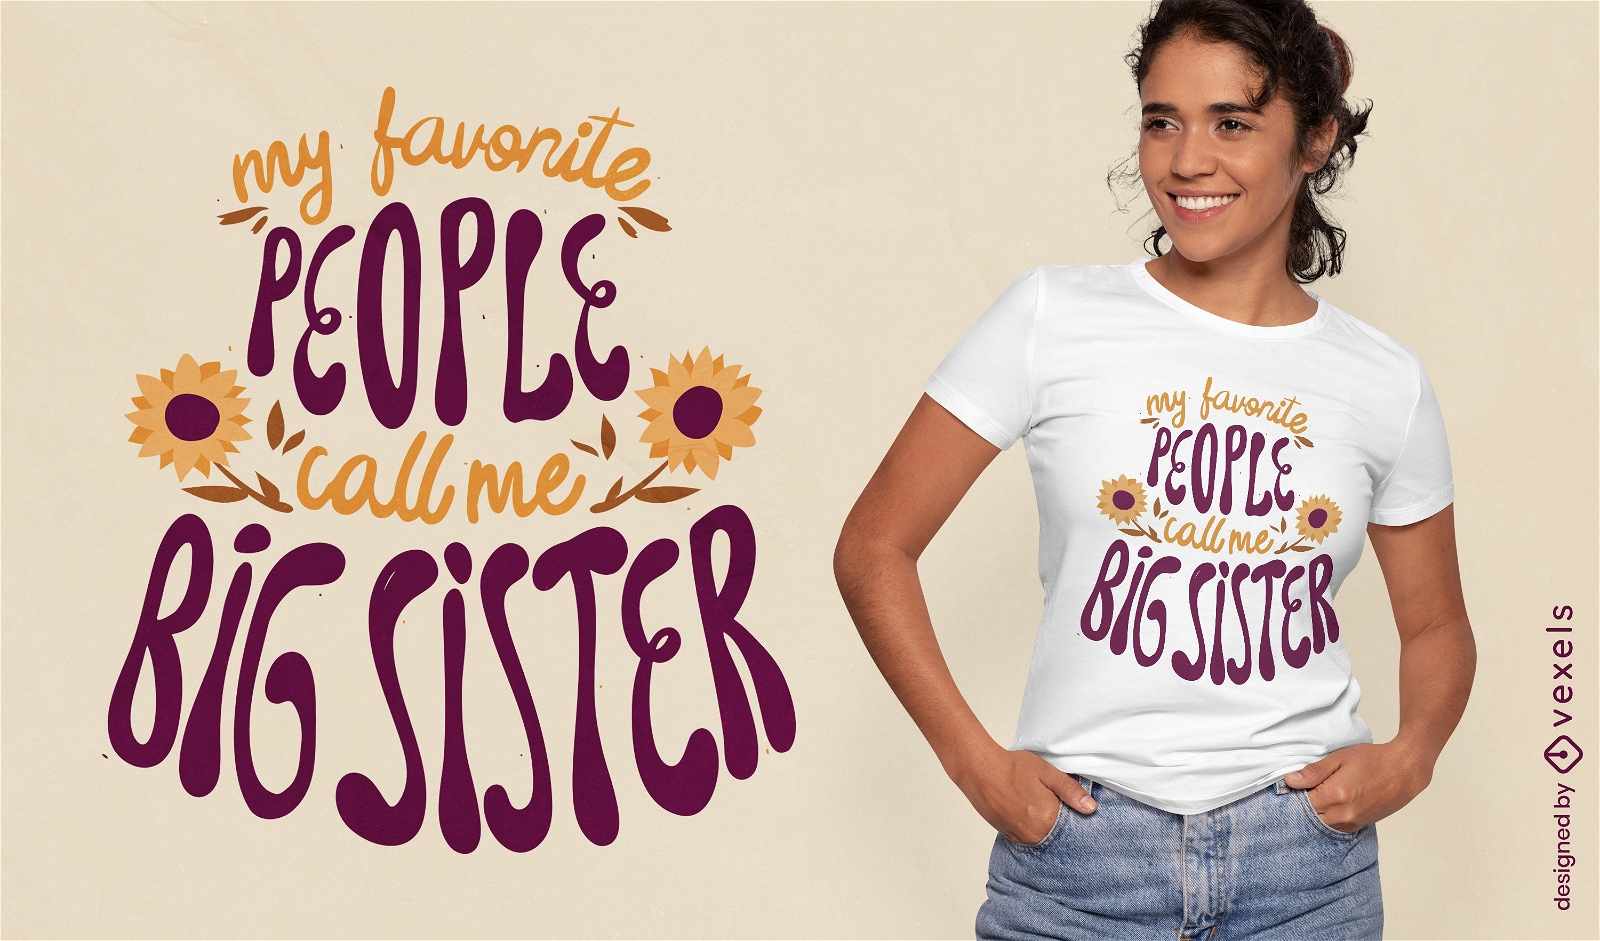 Cita de hermana mayor con diseño de camiseta de girasoles